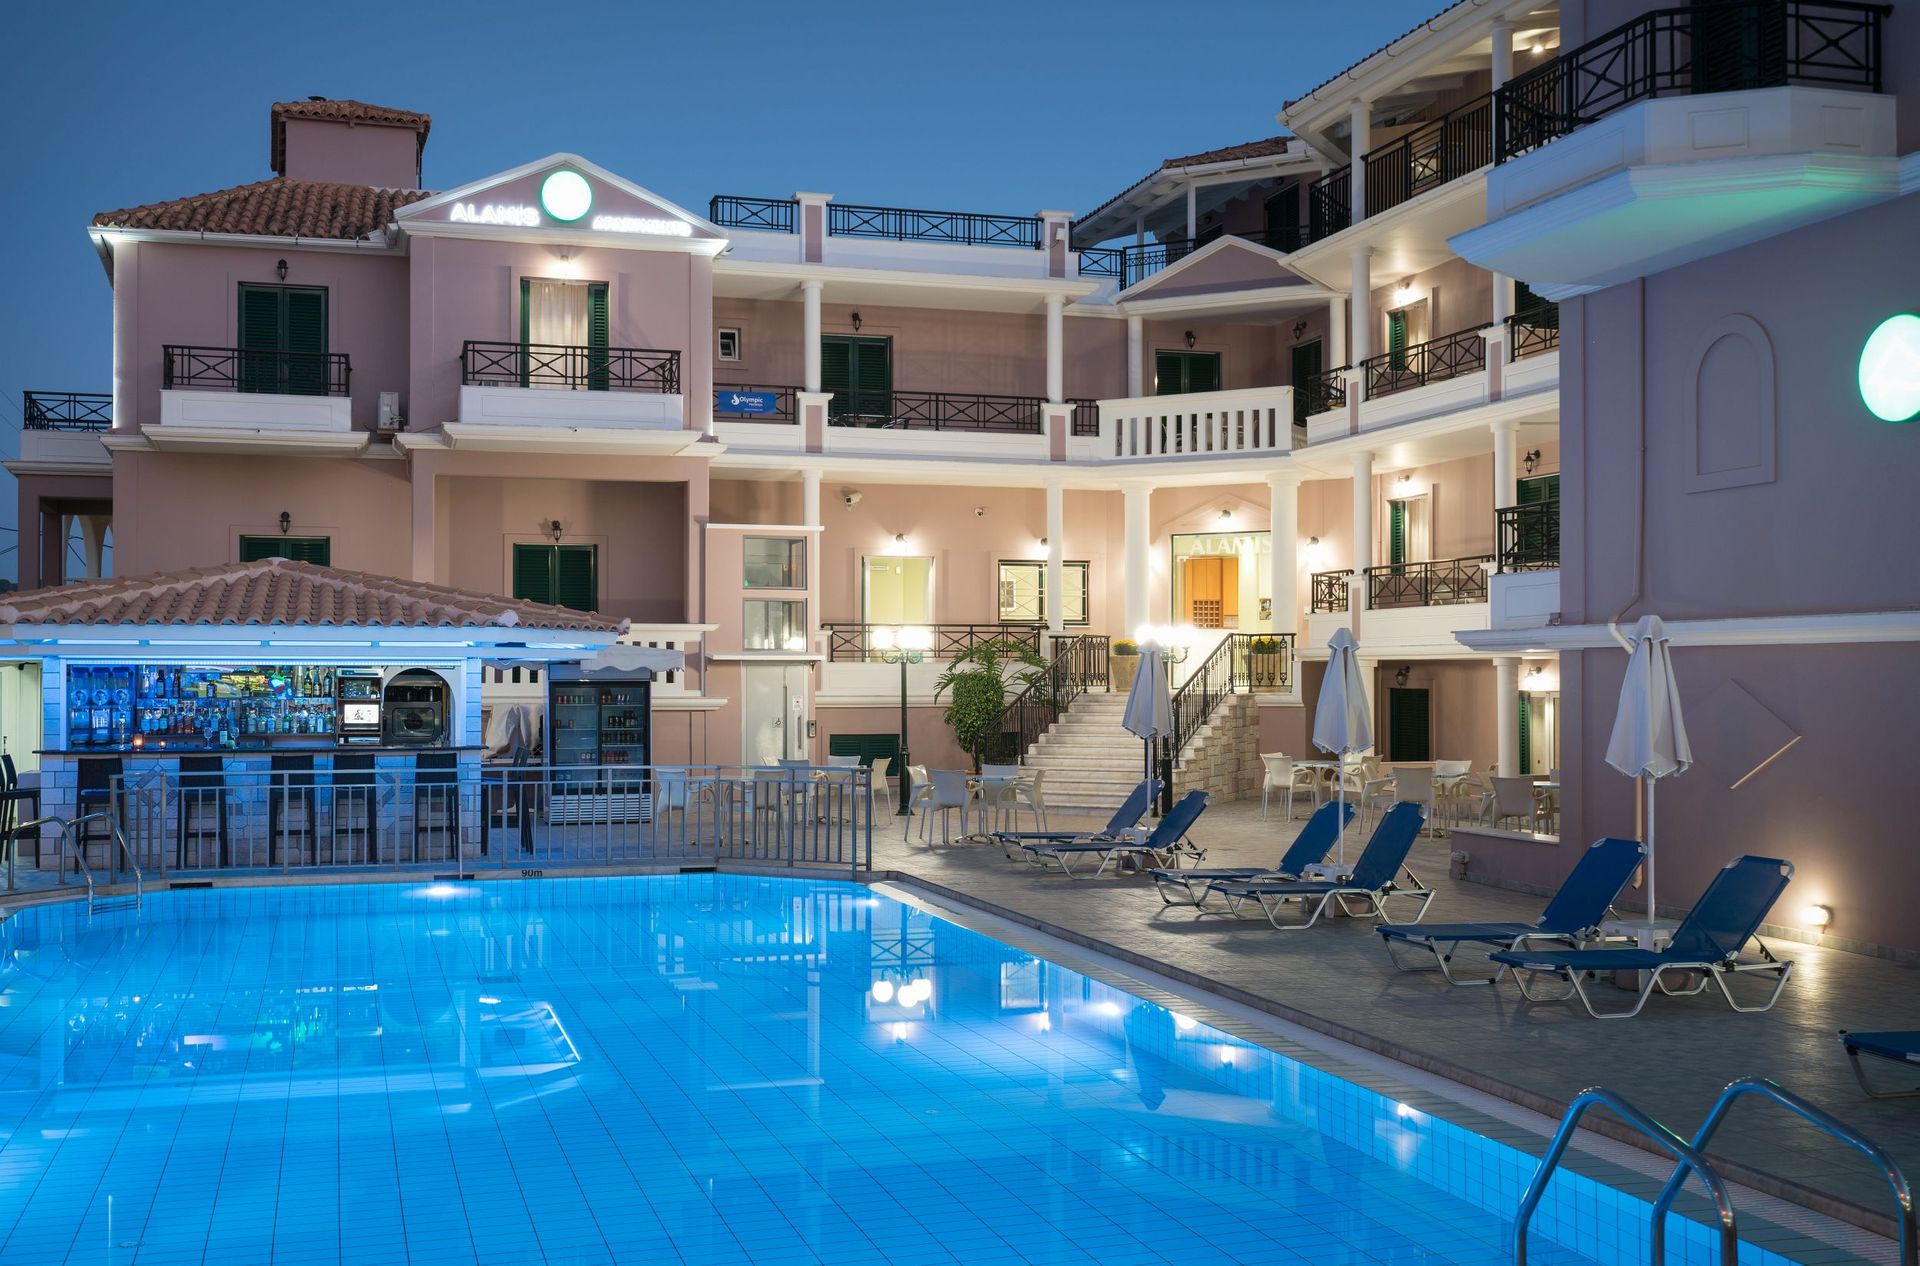 Alamis Apartments - Ζάκυνθος ✦ 3 Ημέρες (2 Διανυκτερεύσεις) ✦ 2 άτομα ✦ 1 ✦ 15/05/2022 έως 30/09/2022 ✦ Κοντά σε Παραλία!